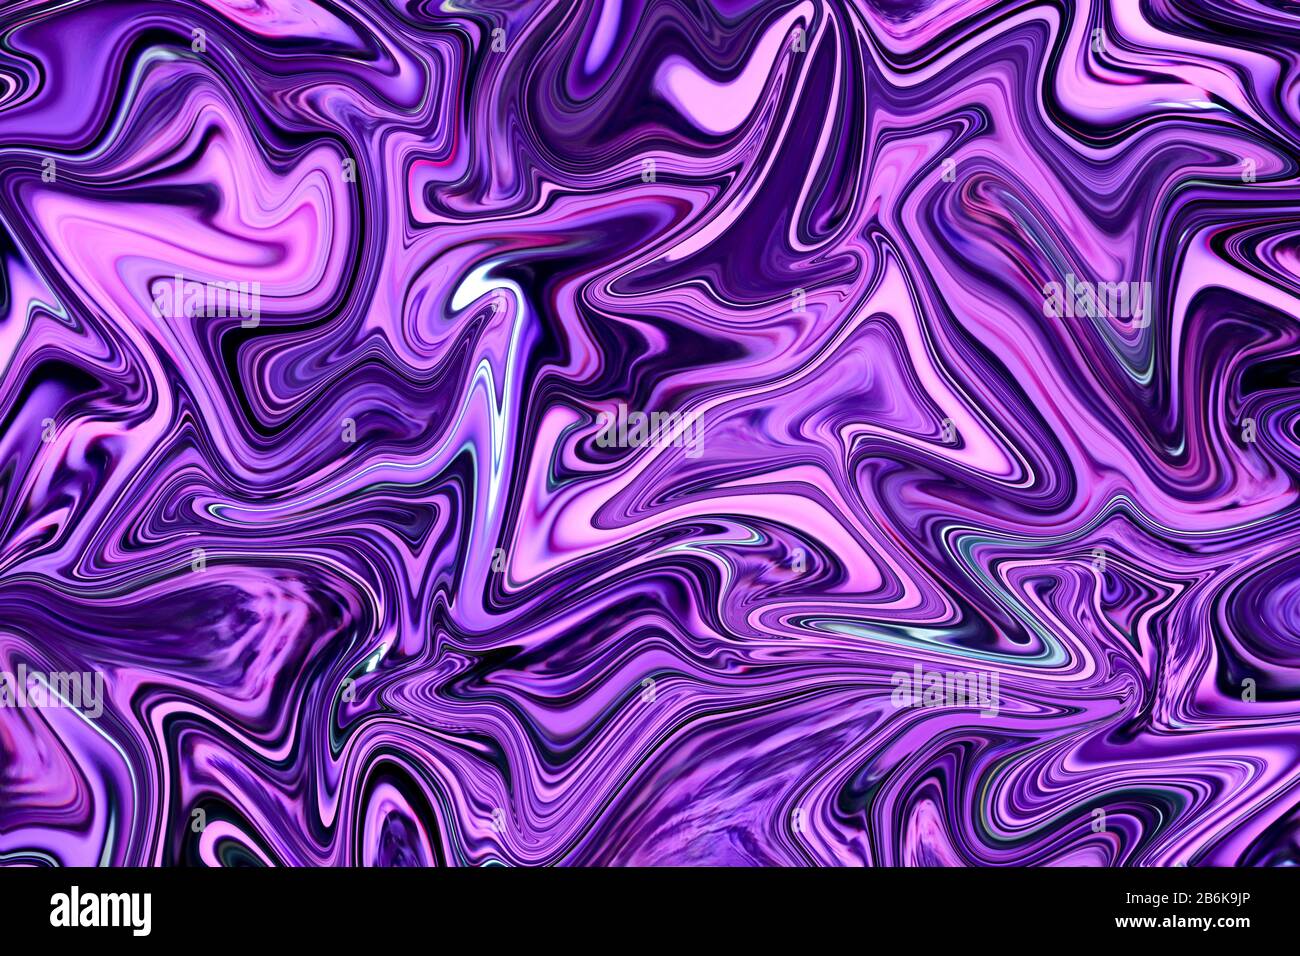 Purple liquid marbling paint swirls background. Fluid painting abstract texture. Stock Photo